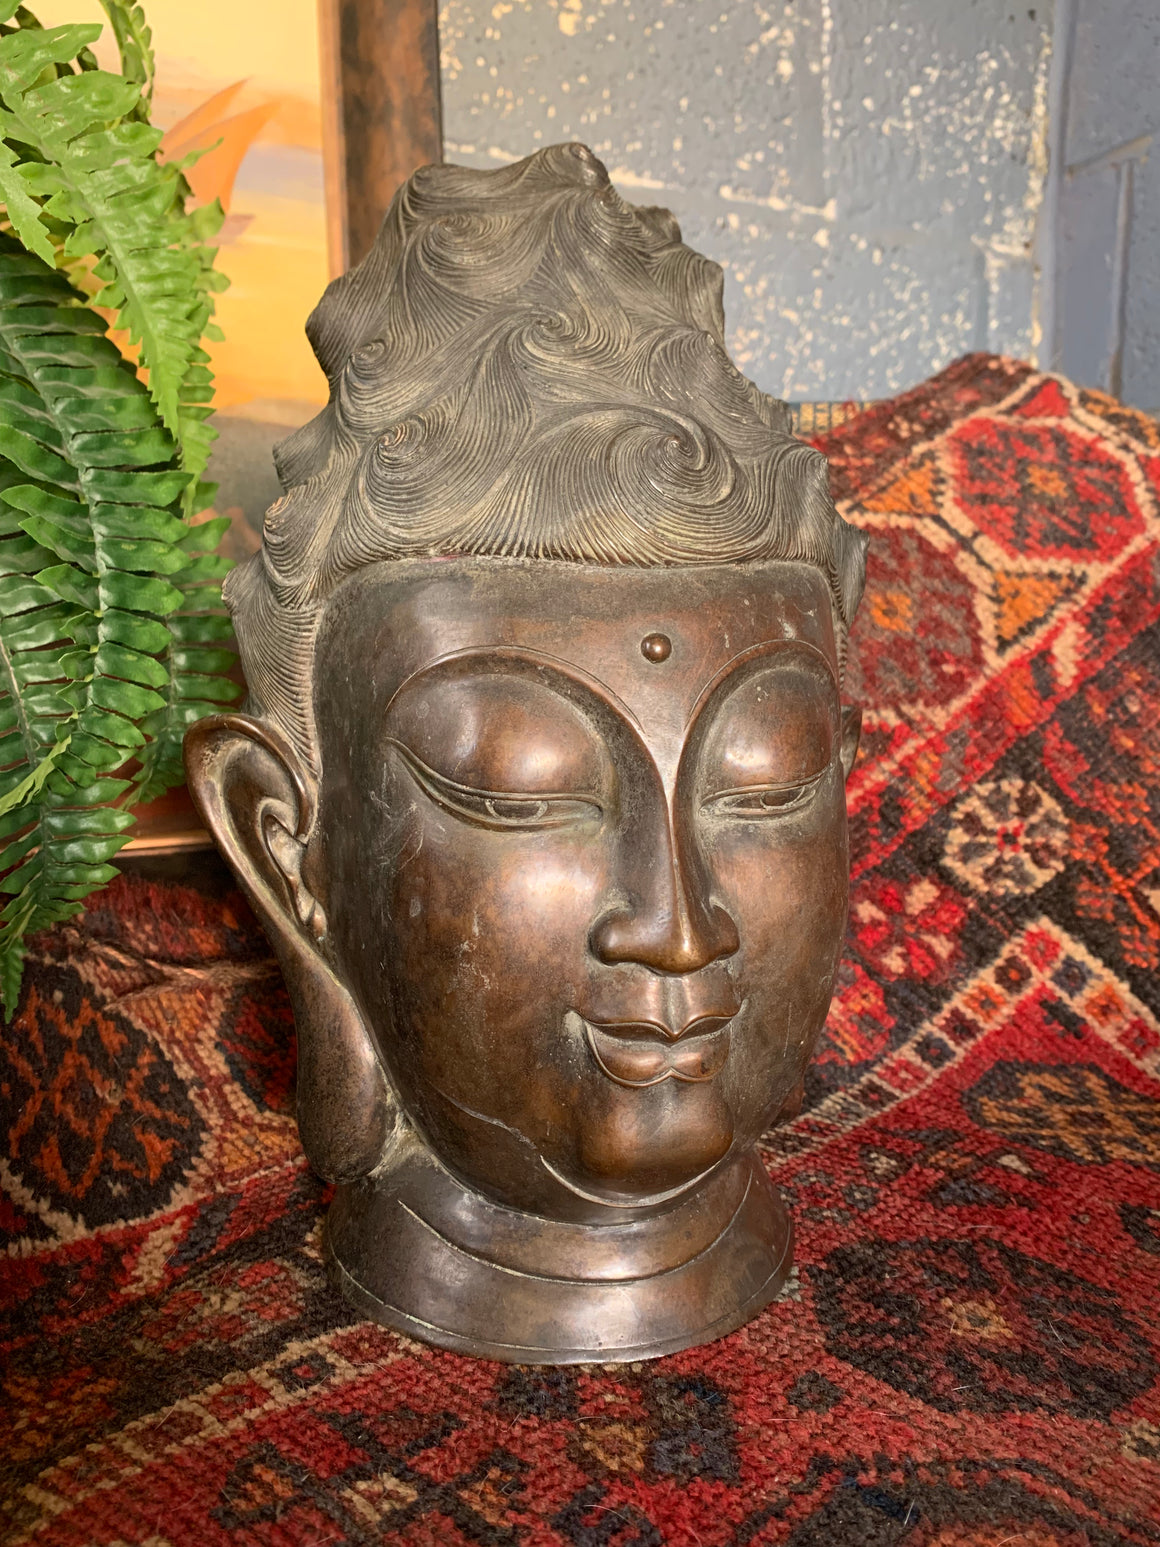 A life size bronze Guanyin bust